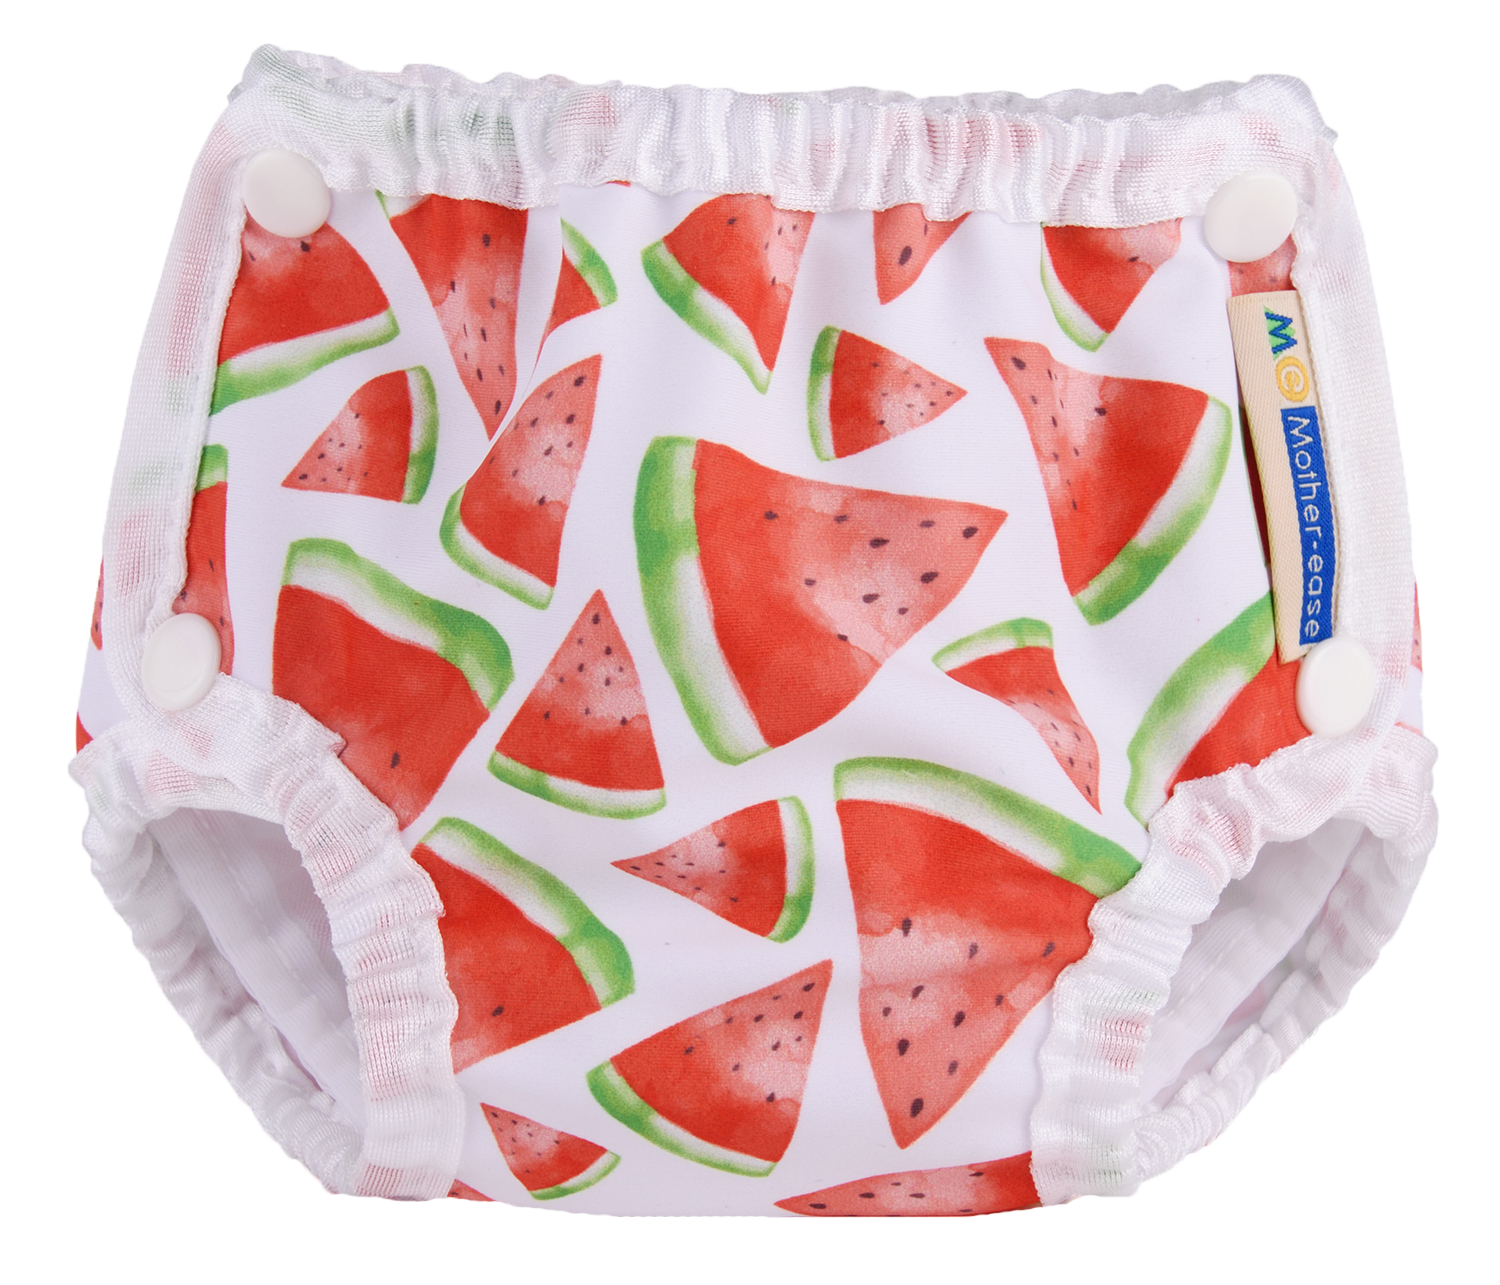 Mother-ease Swim Diaper - Watermelon